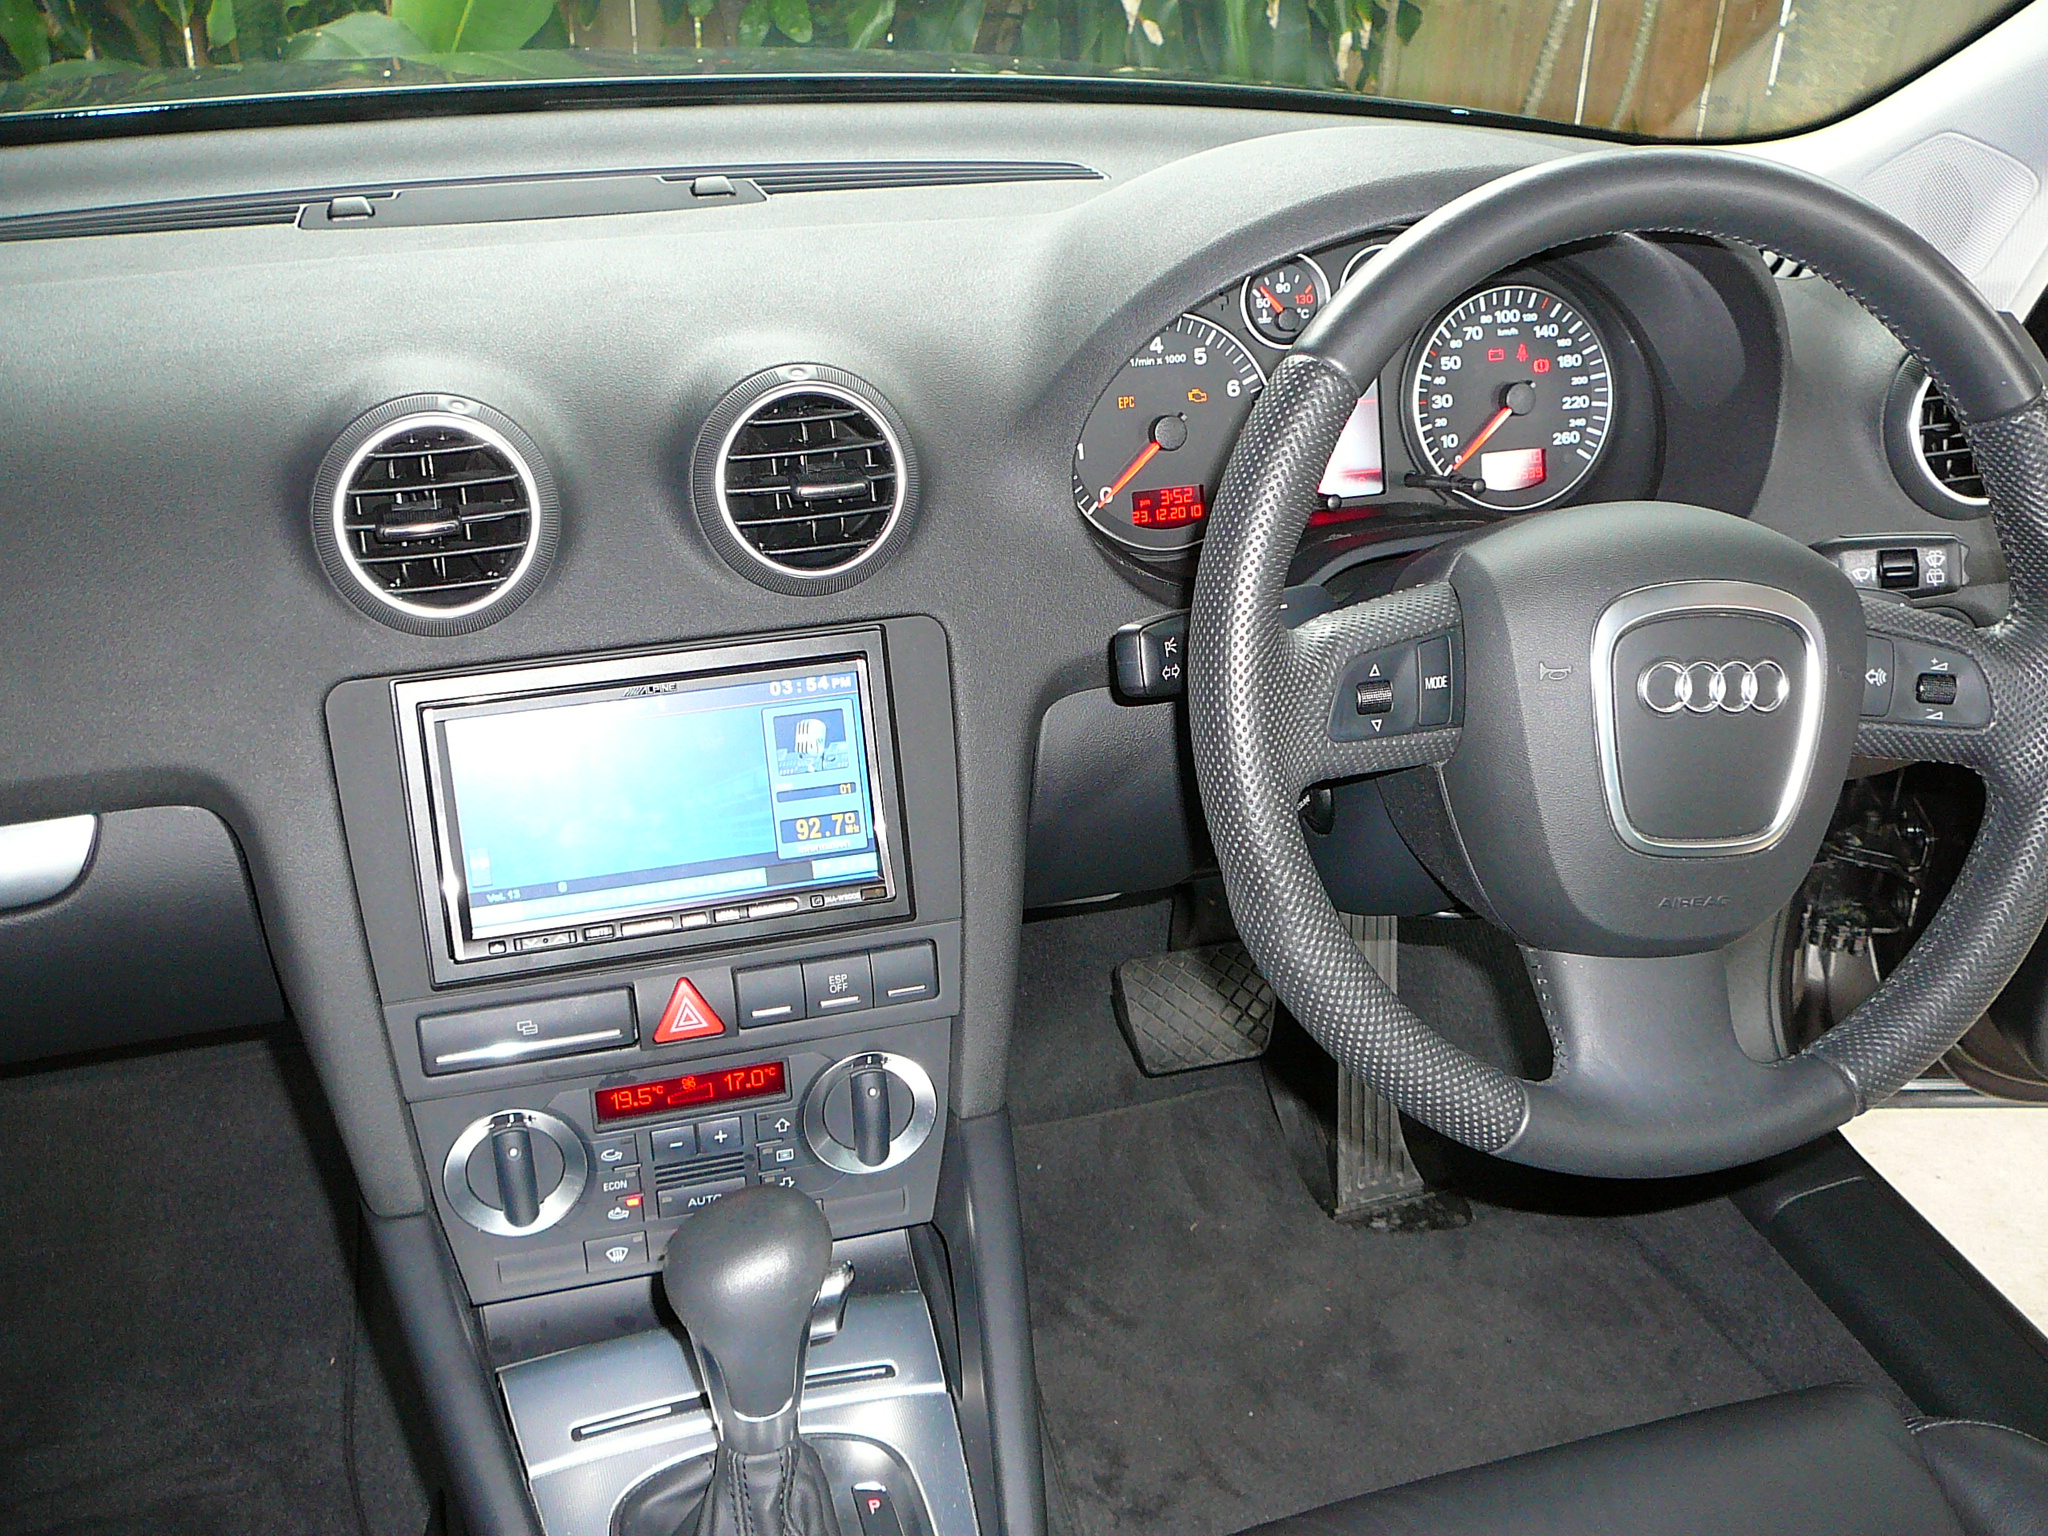 Audi A3 Indash GPS, Navigation, iPod, iPhone, Bluetooth Handsfree system